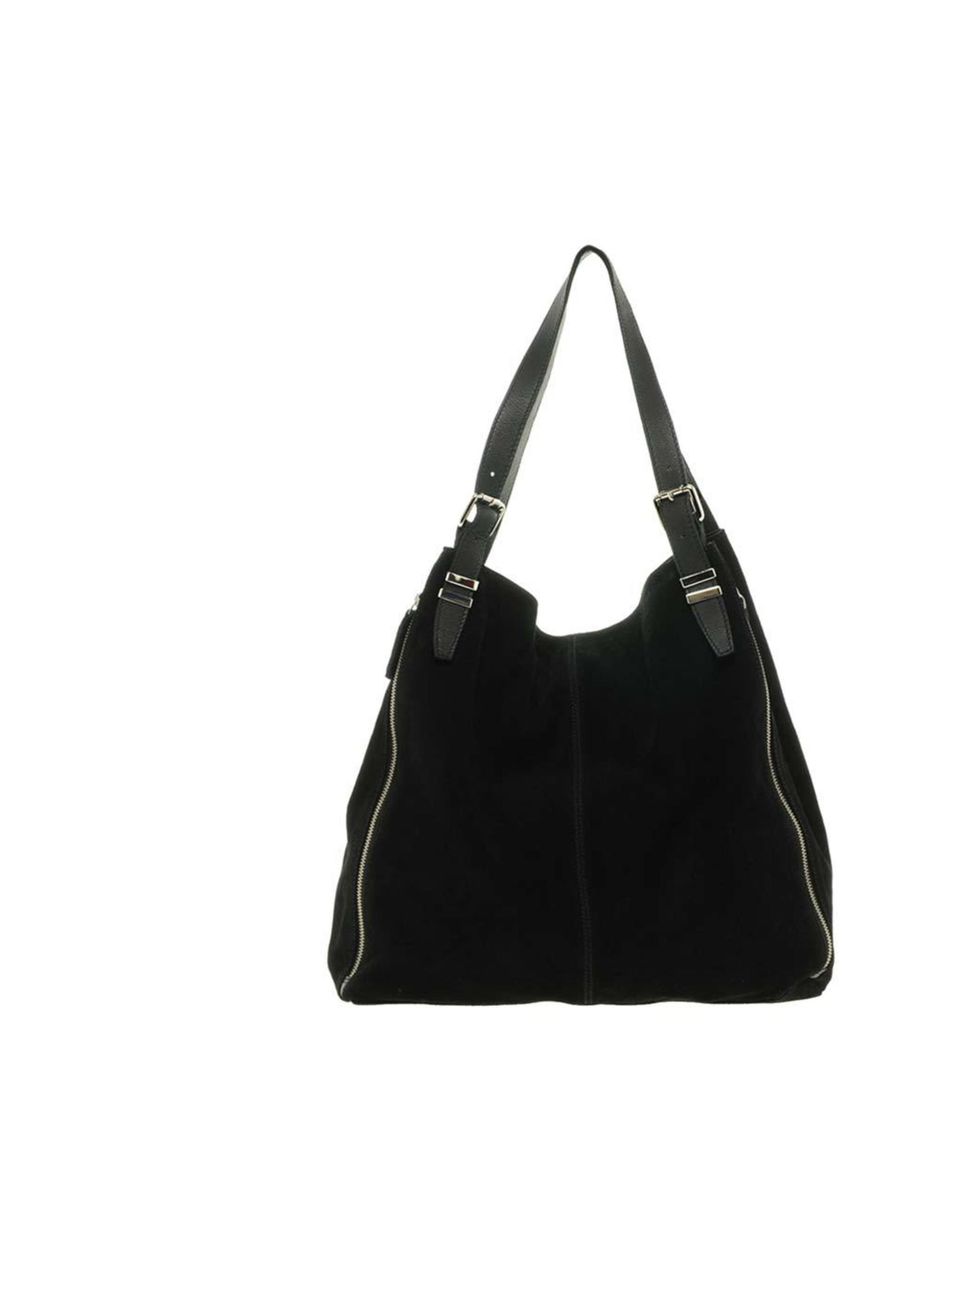 <p><a href="http://www.asos.com/Women/">ASOS</a> leather tote bag £45</p>